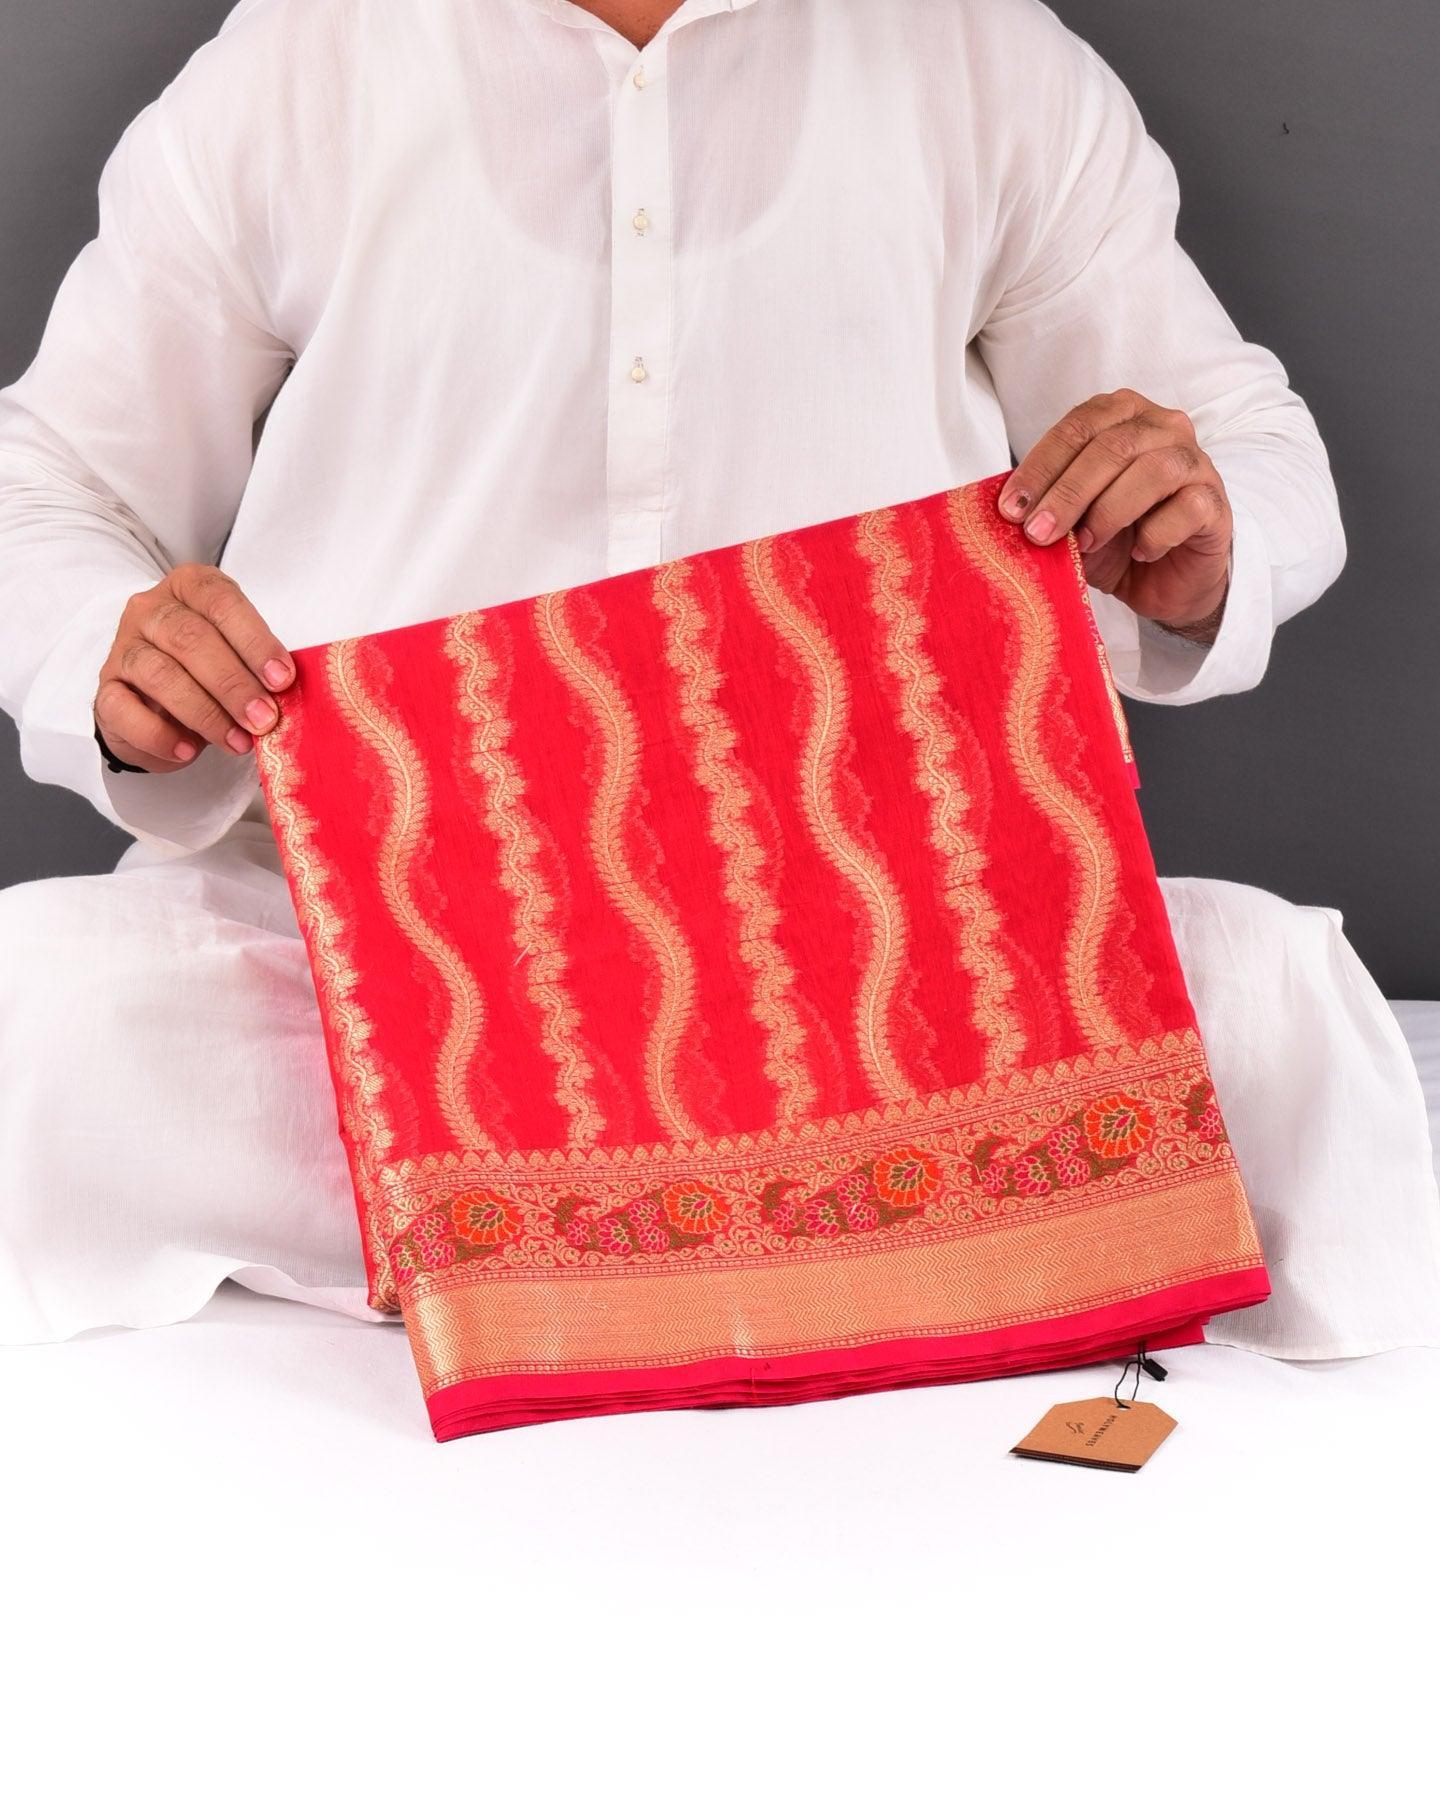 Red Banarasi Spiral Zari Stripes Cutwork Brocade Woven Cotton Silk Saree with Meena Bel Brocade Border - By HolyWeaves, Benares